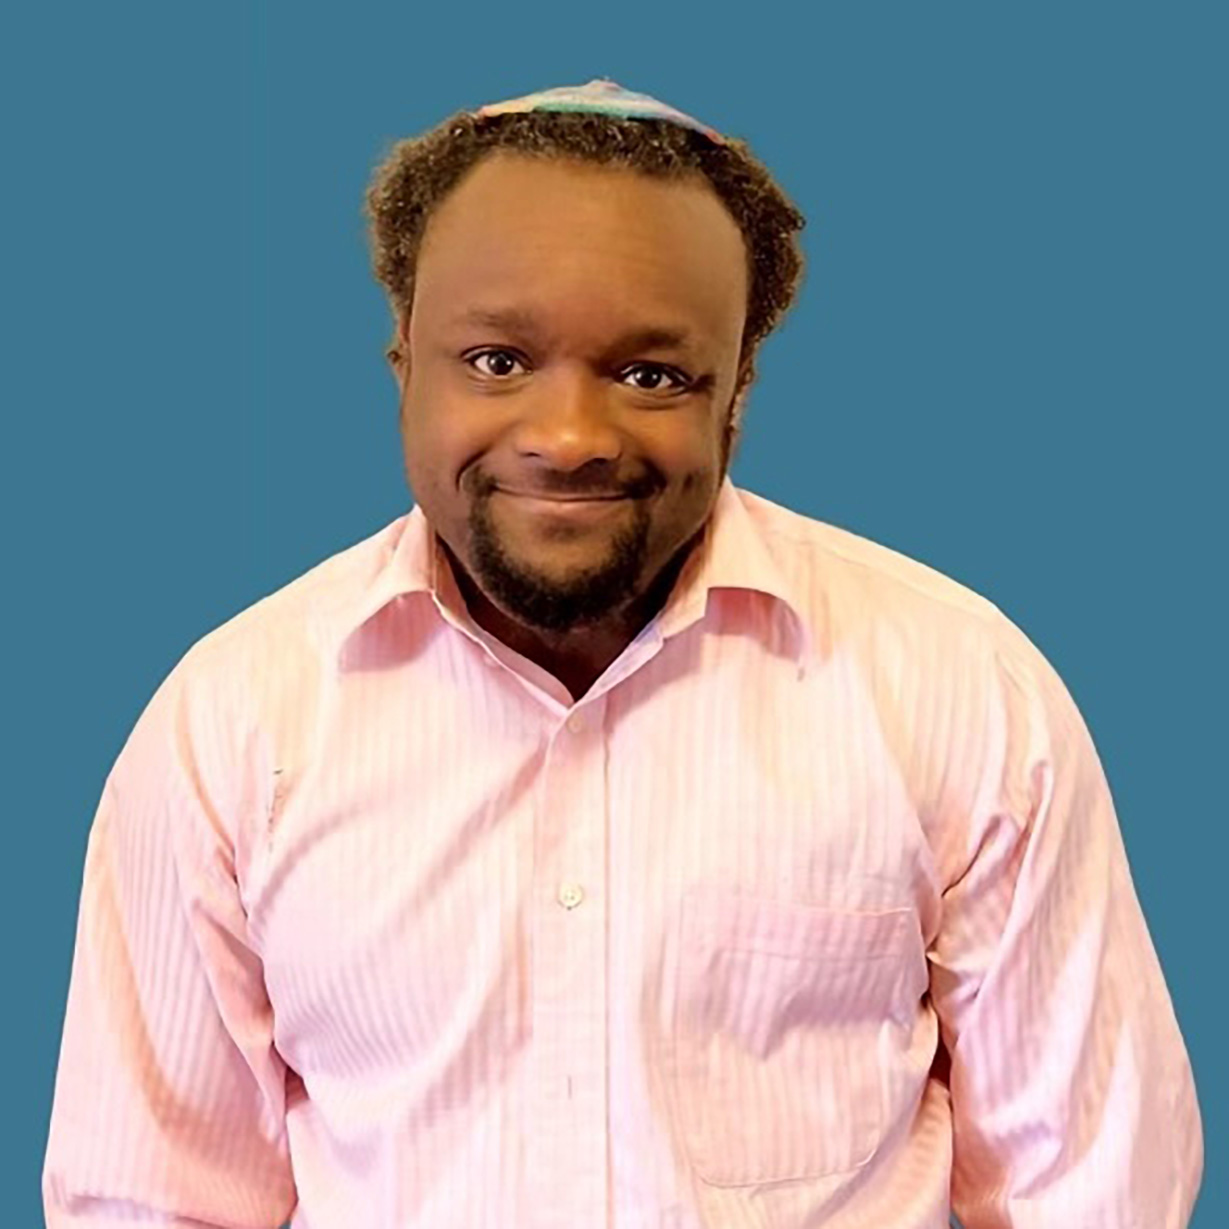 Profile picture of Enzi, a Black man, wearing a pink shirt and kippah.